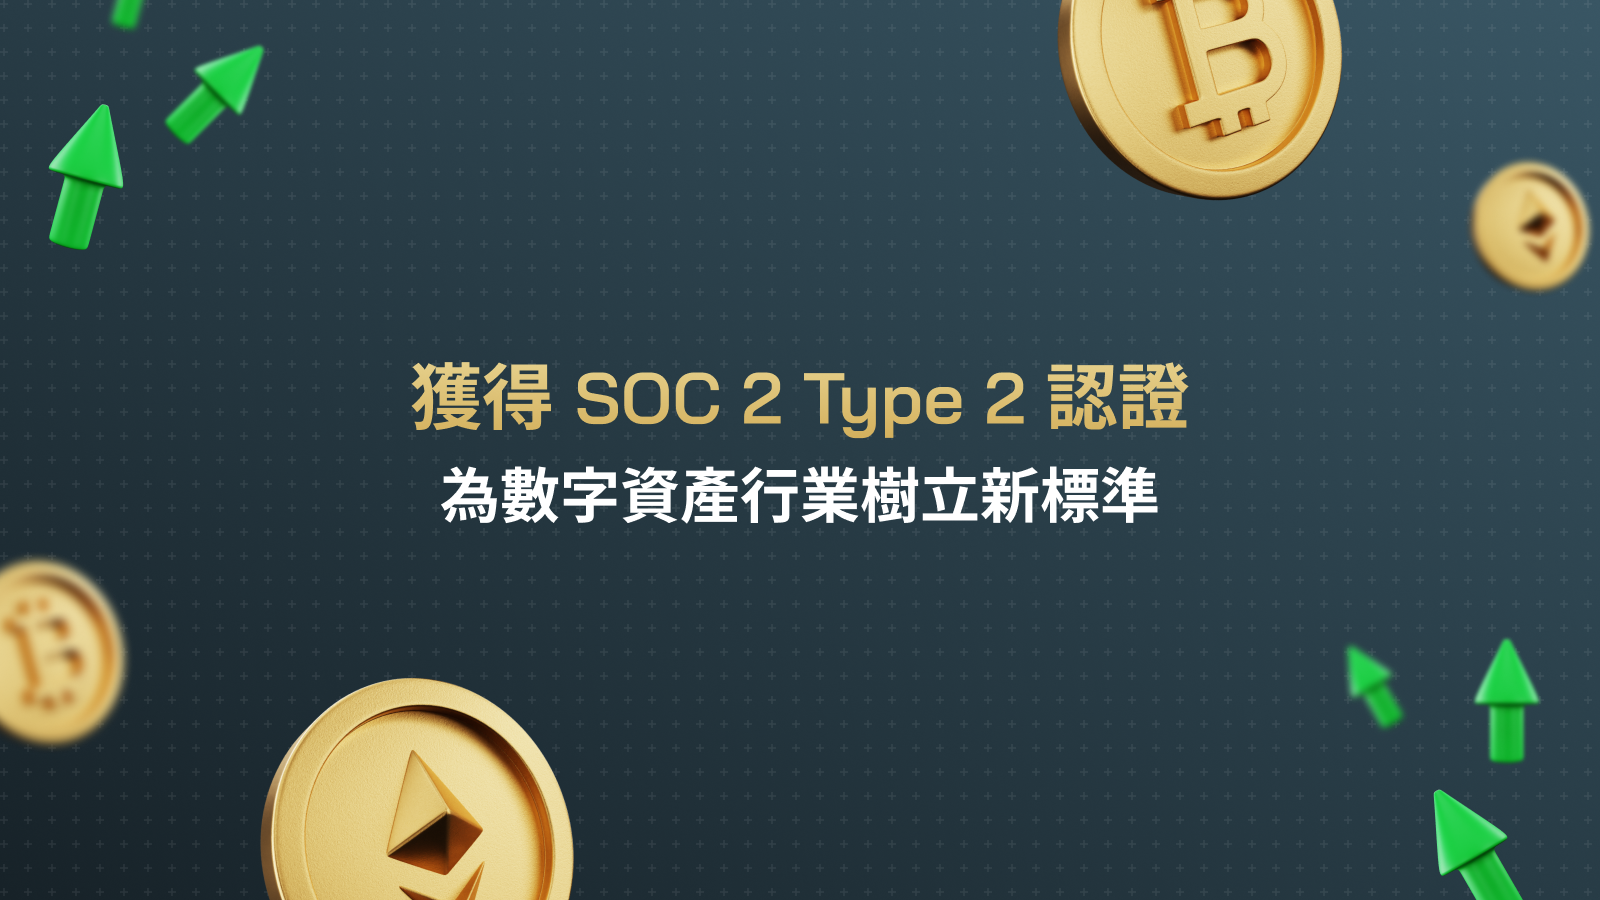 soc 2 type 2 - Web Banner v1.0 (TC)